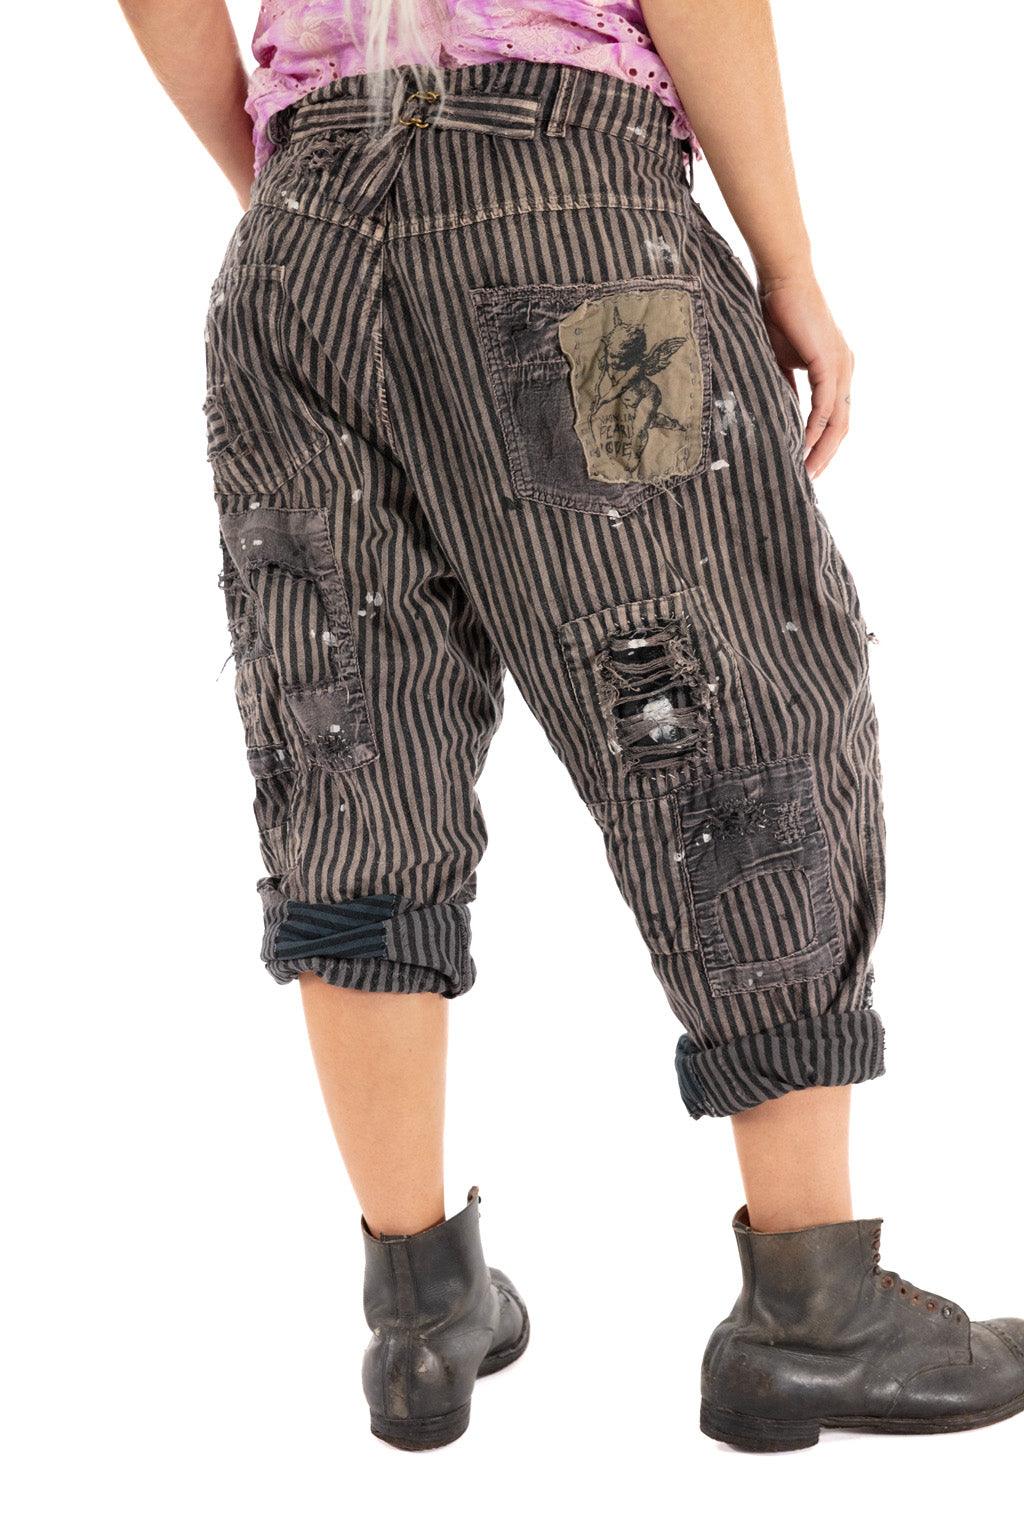 YD Stripe Miner Pants - Magnolia Pearl Clothing